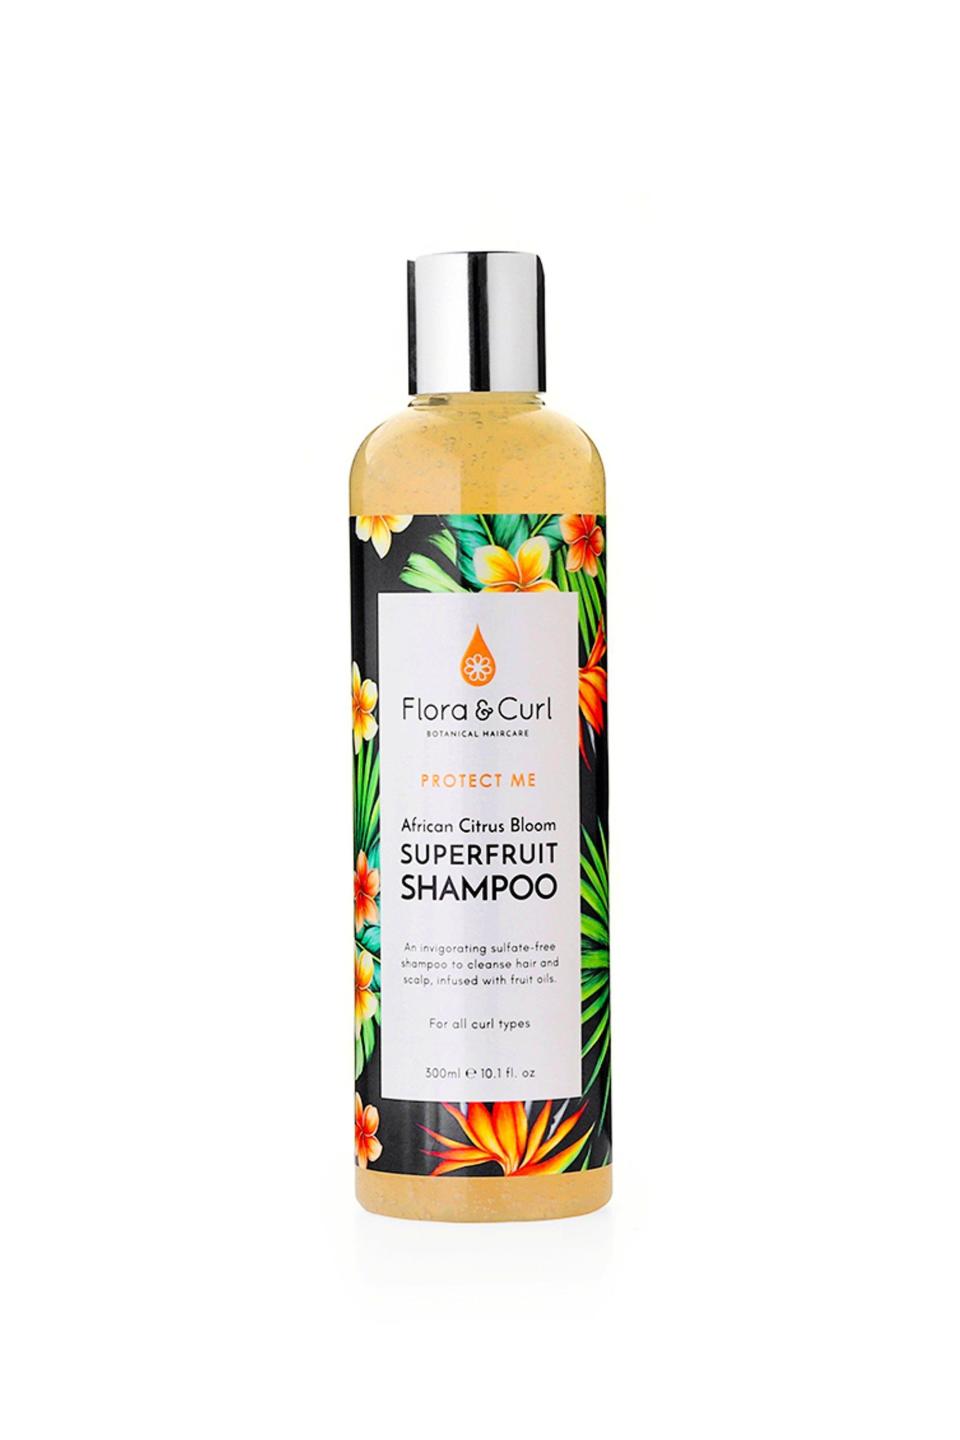 3) African Citrus Bloom Superfruit Shampoo